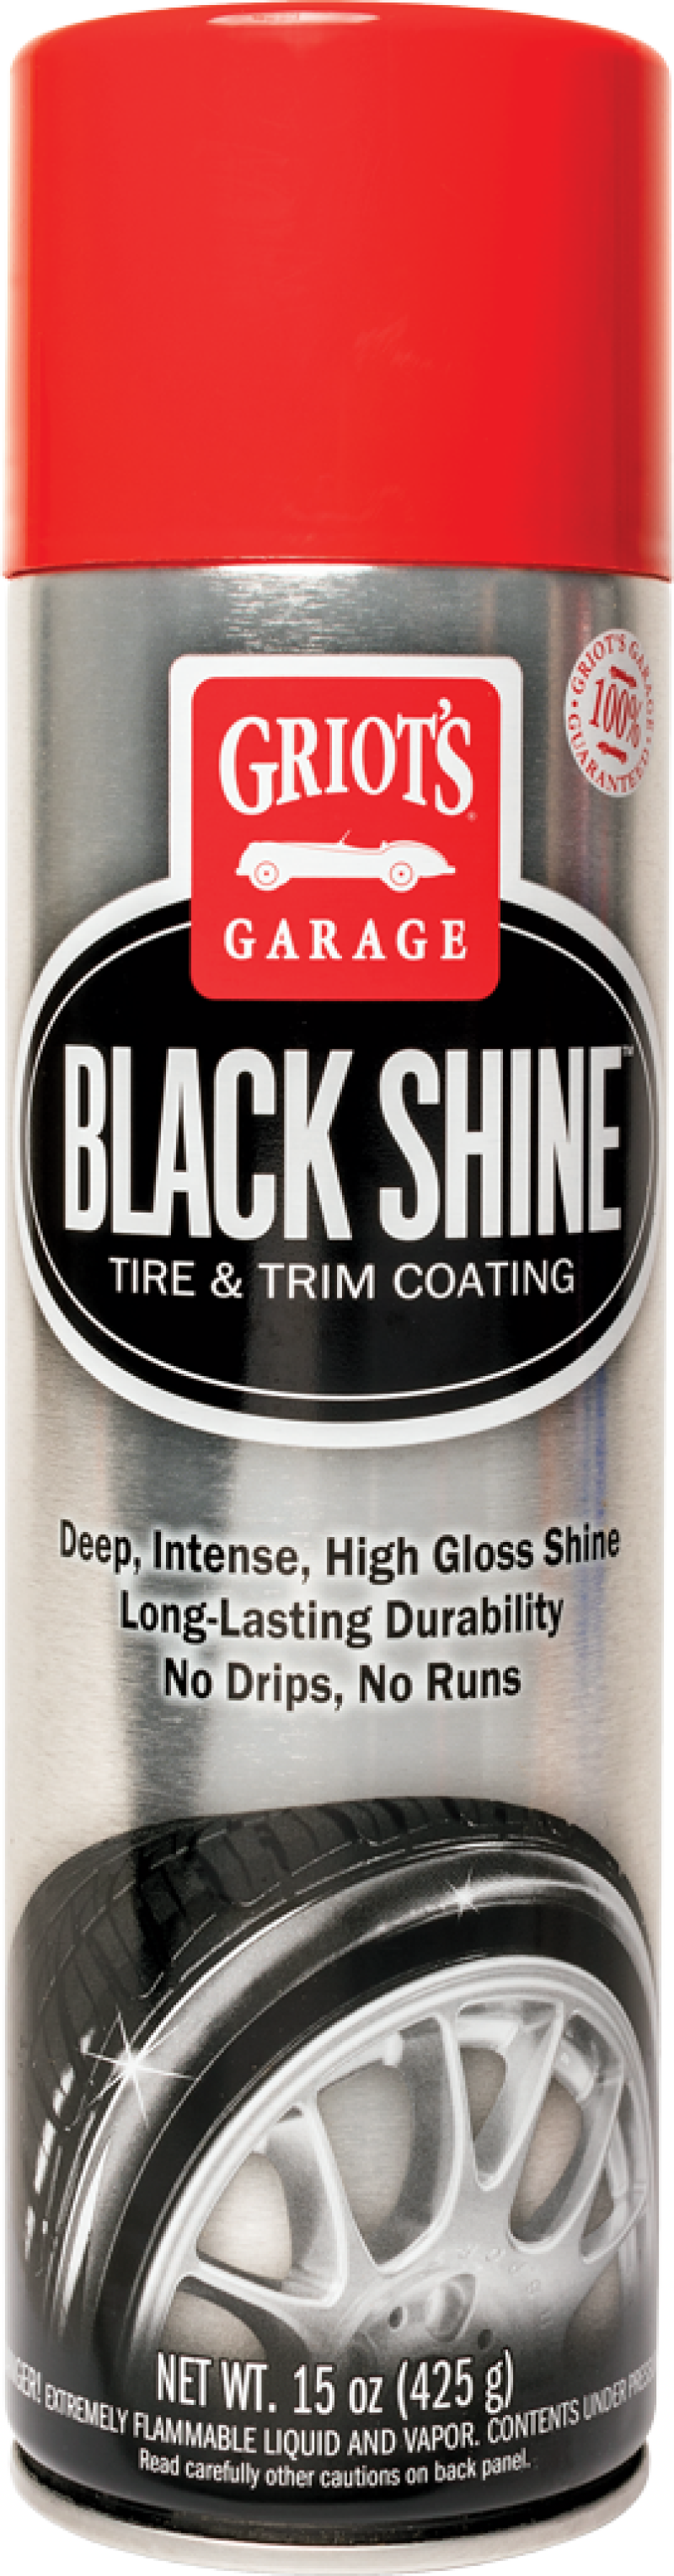 Griots Garage Black Shine Tire and Trim Coating - 15oz - Case of 12